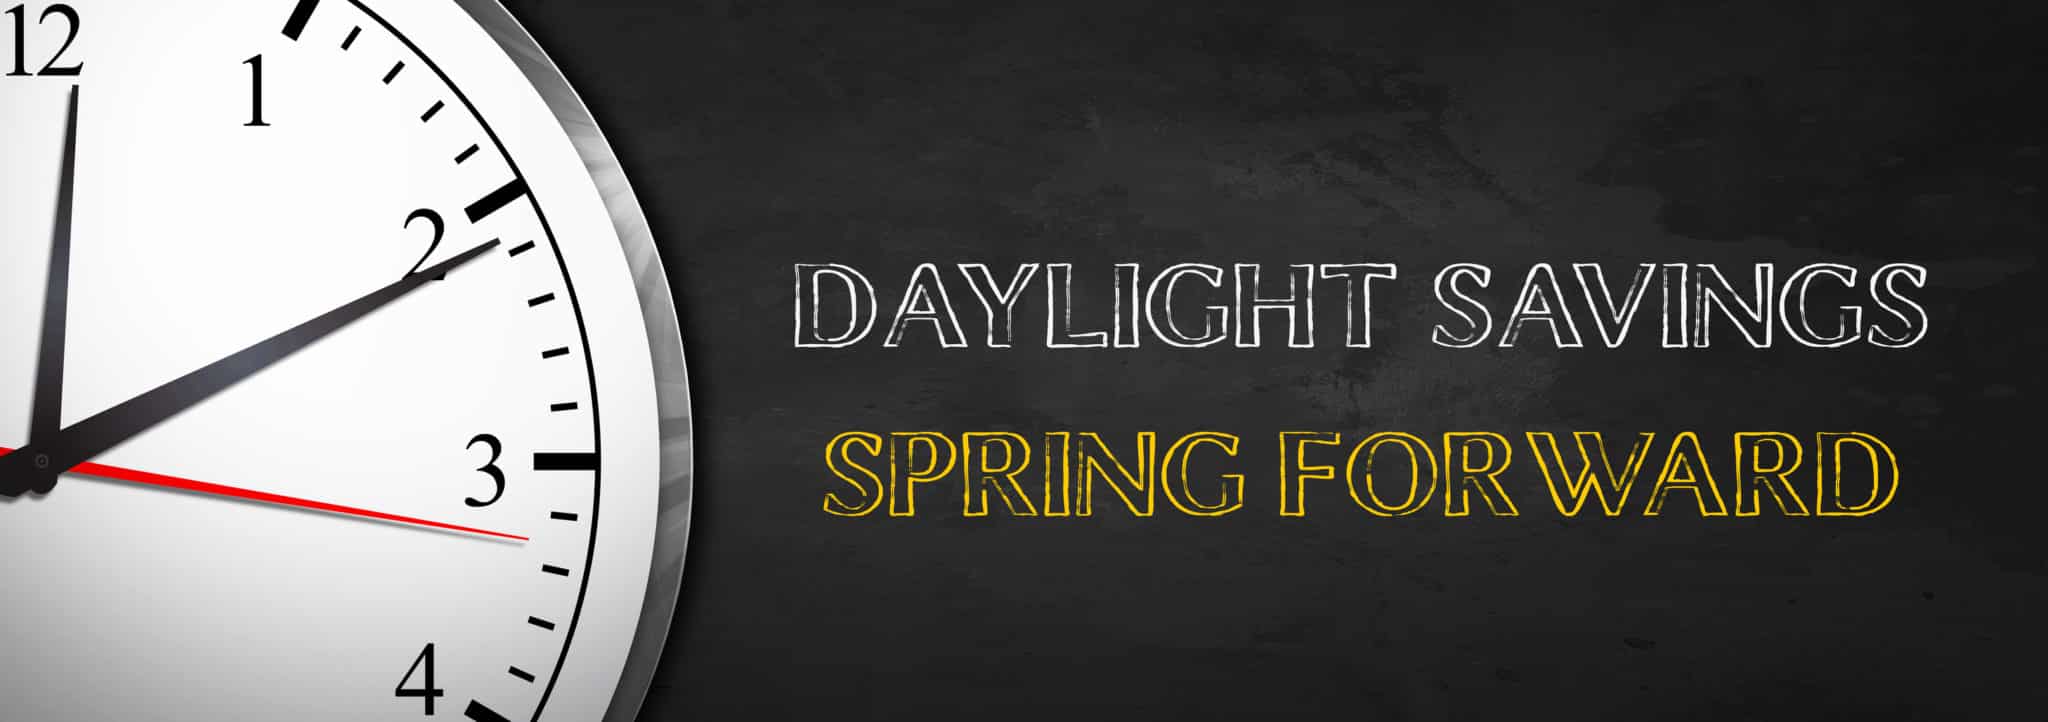 Daylight Savings - Spring Forward banner